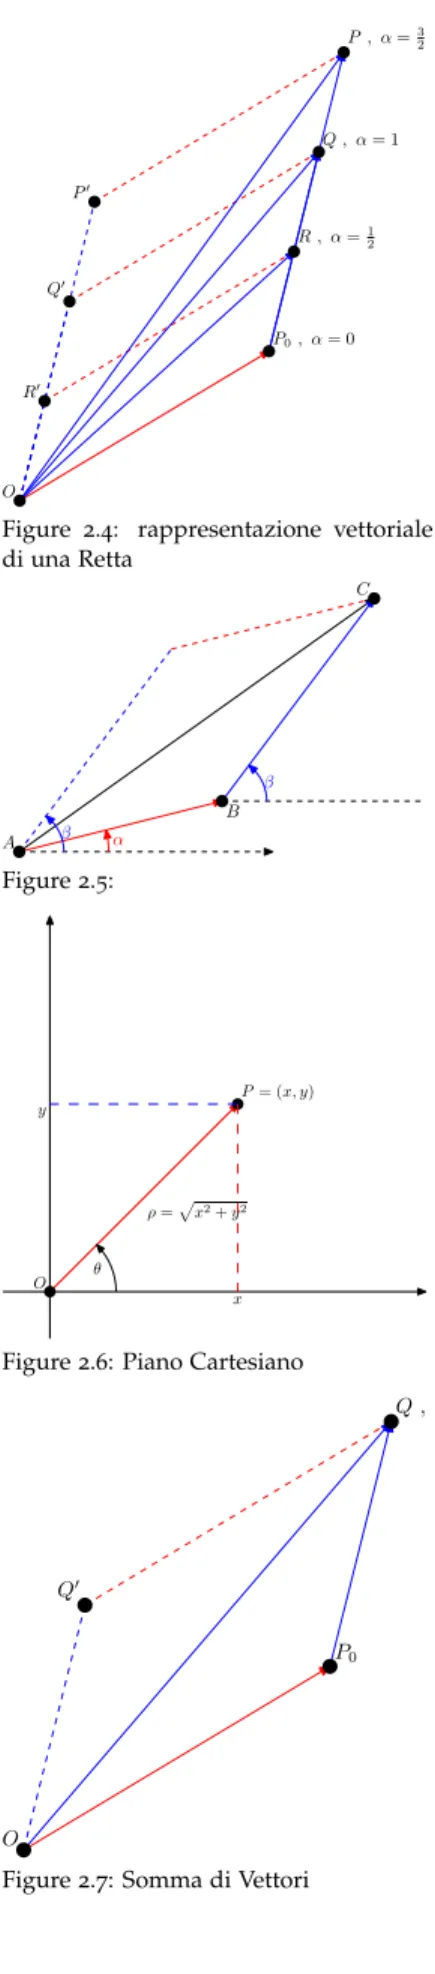 Figure 2.4: rappresentazione vettoriale di una Retta